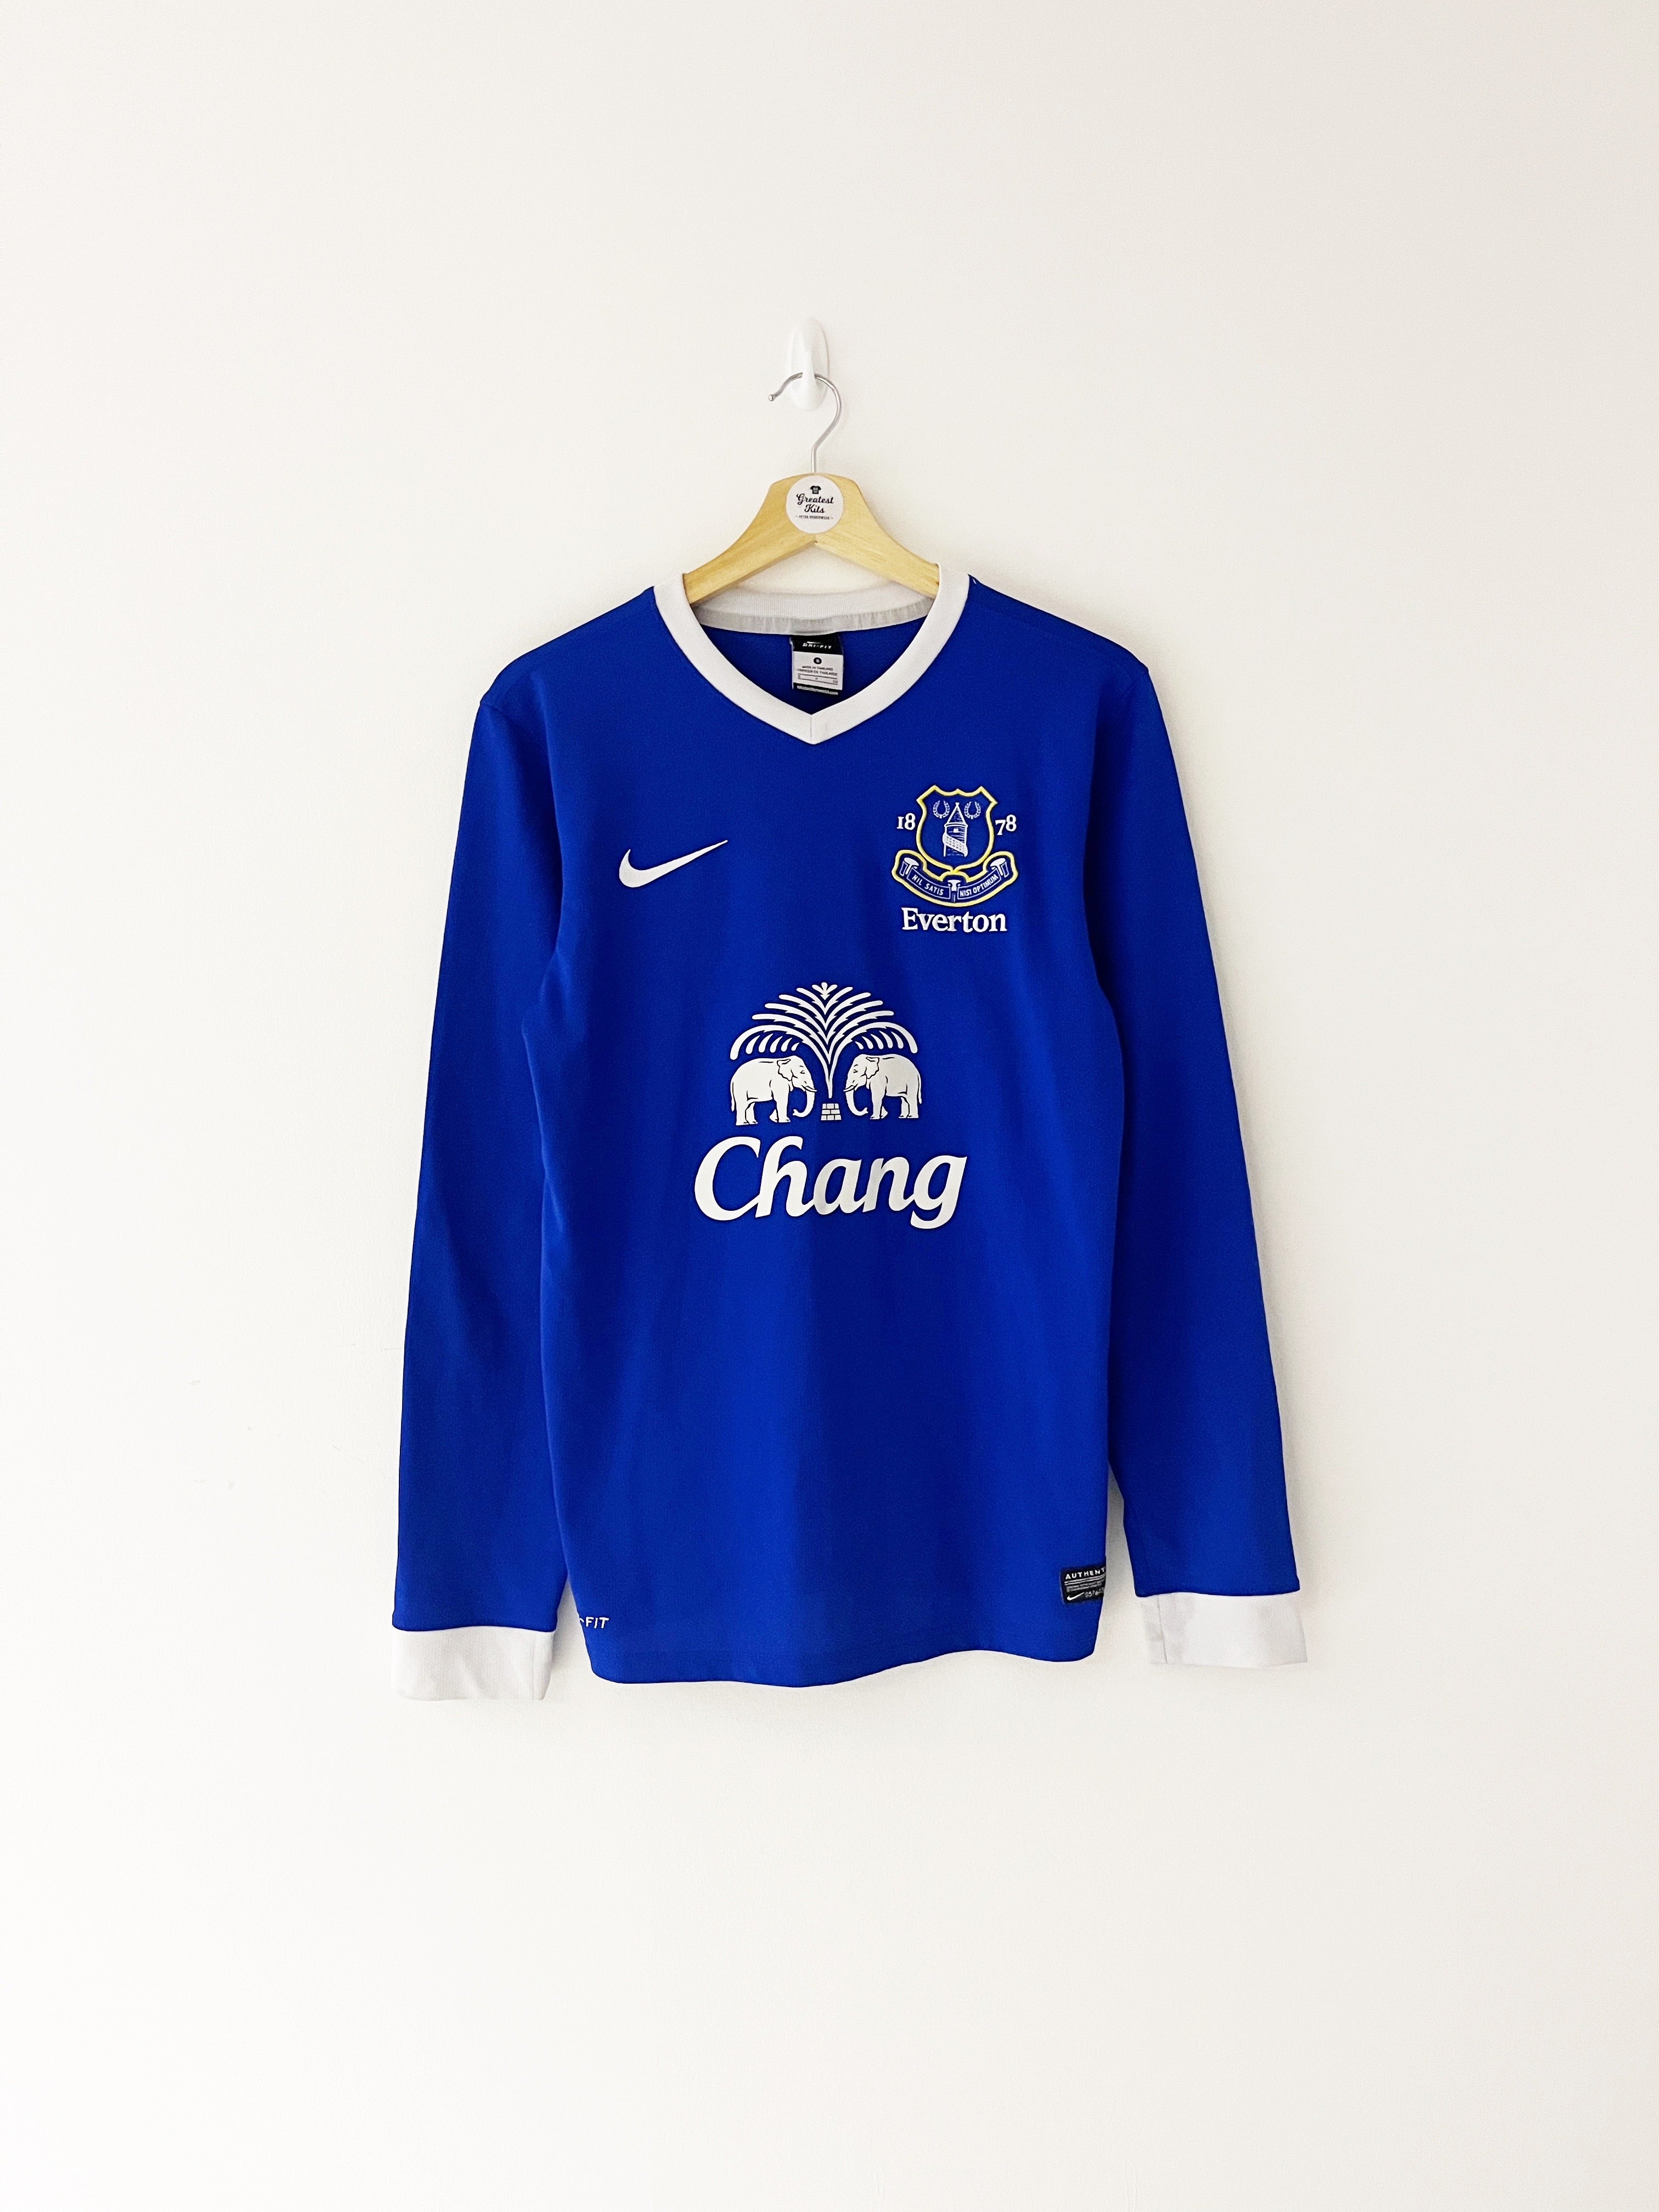 2012/13 Everton Home L/S Shirt (S) 9/10